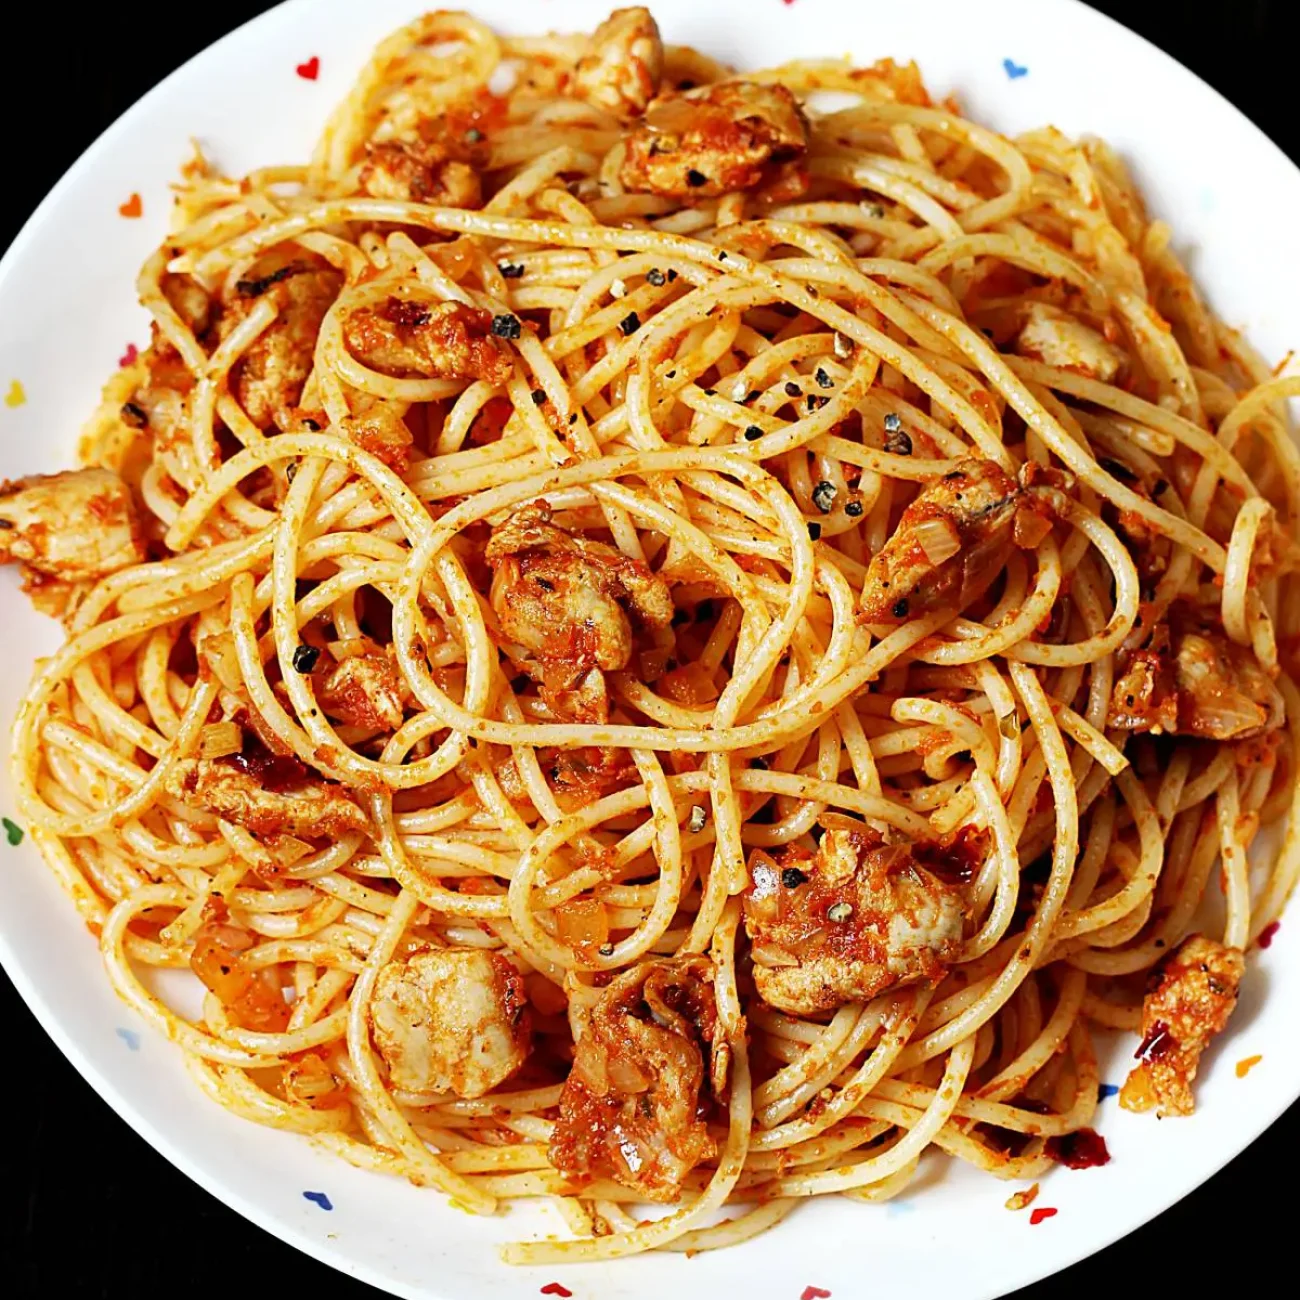 Homemade Chicken Spaghetti